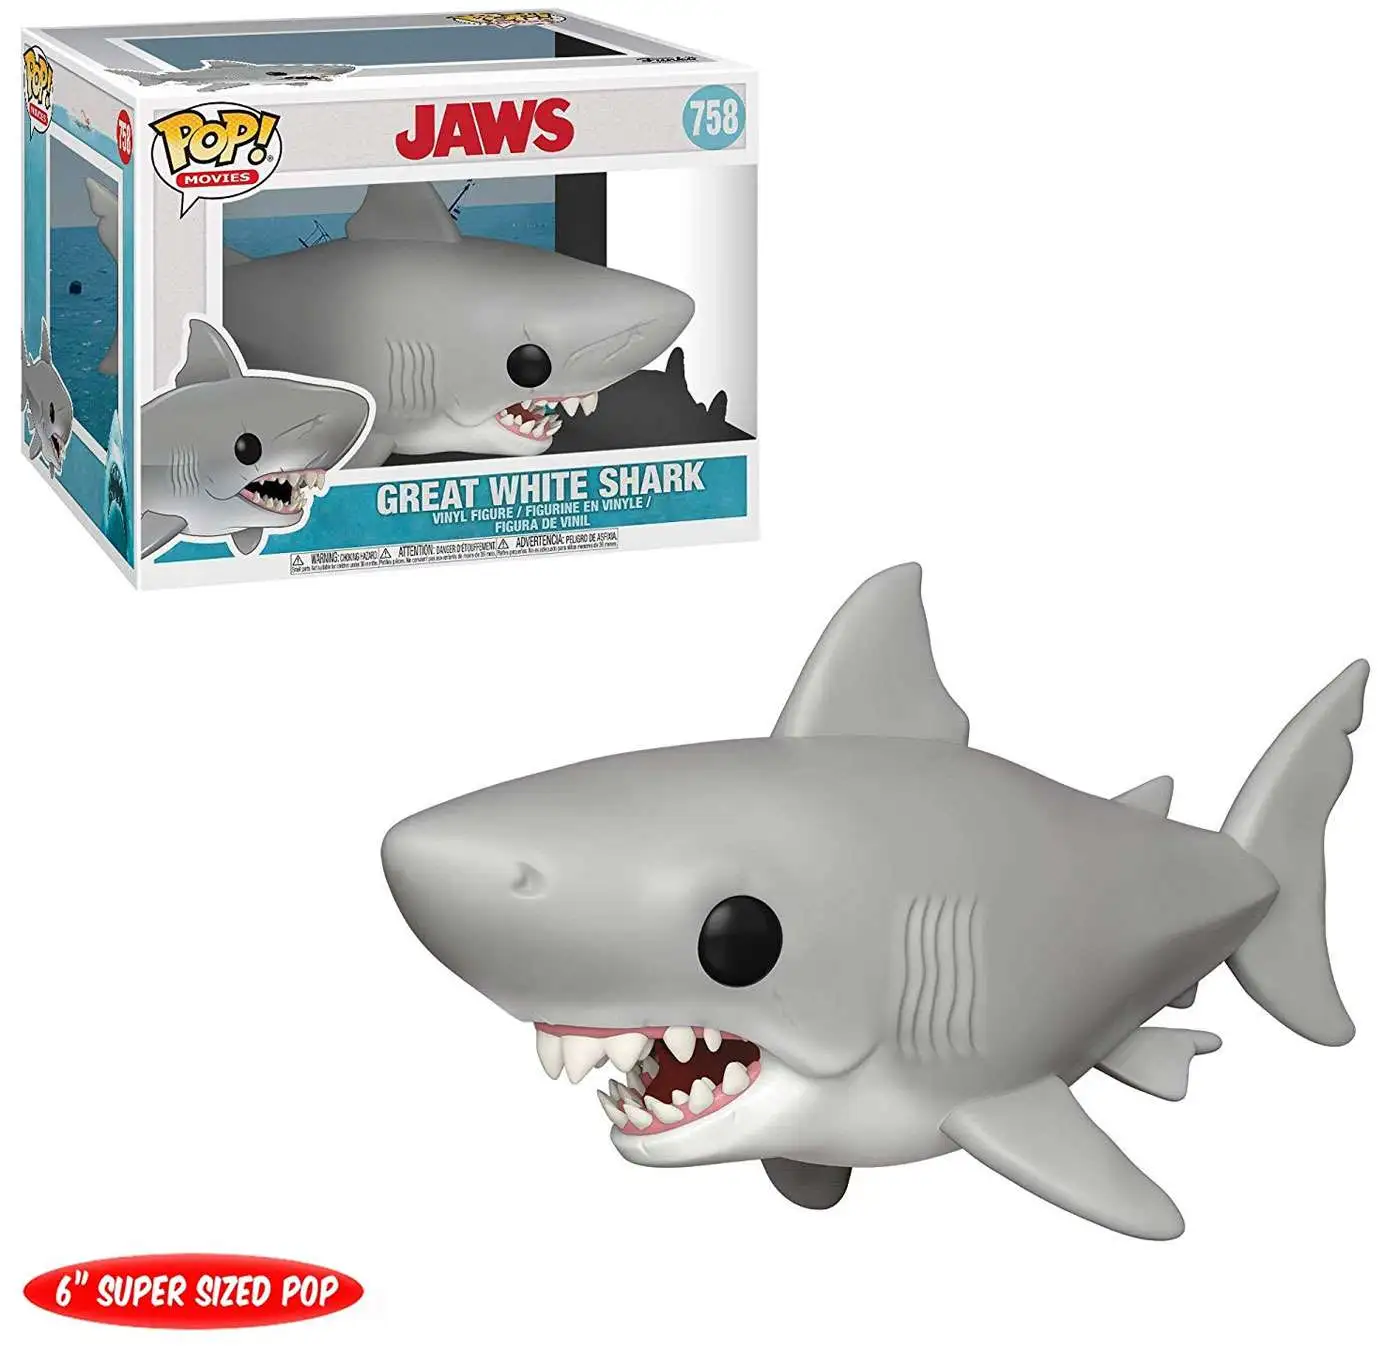 Funko Jaws POP! Movies Great White Shark 6-Inch Vinyl Figure #758